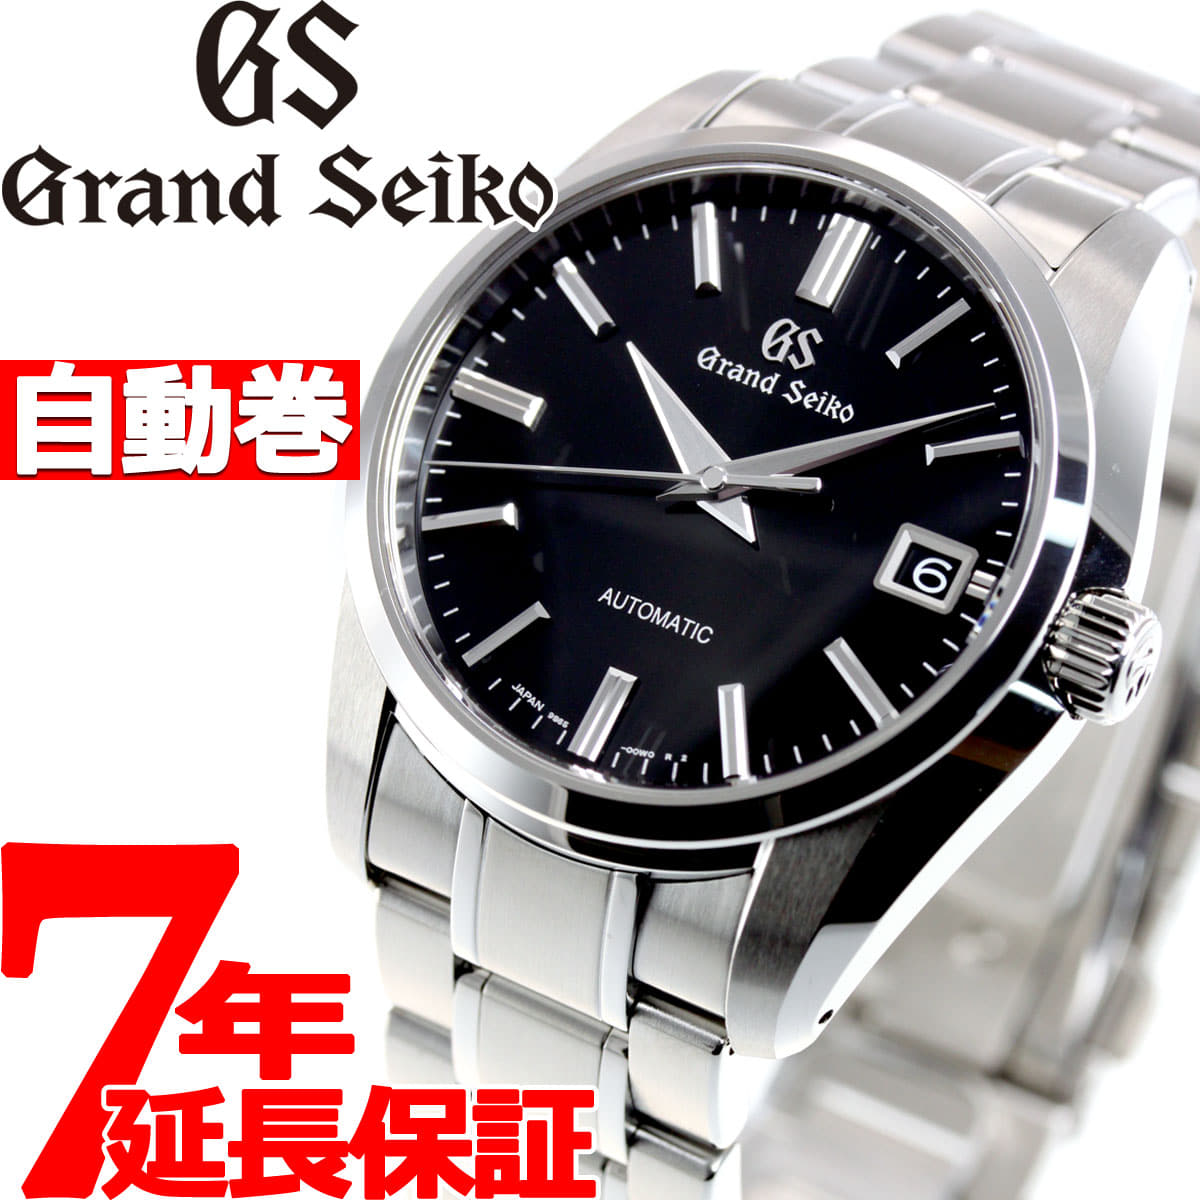 New]Grand SEIKO GRAND SEIKO mechanical self-winding watch watch men SBGR317  [2019 new works] - BE FORWARD Store